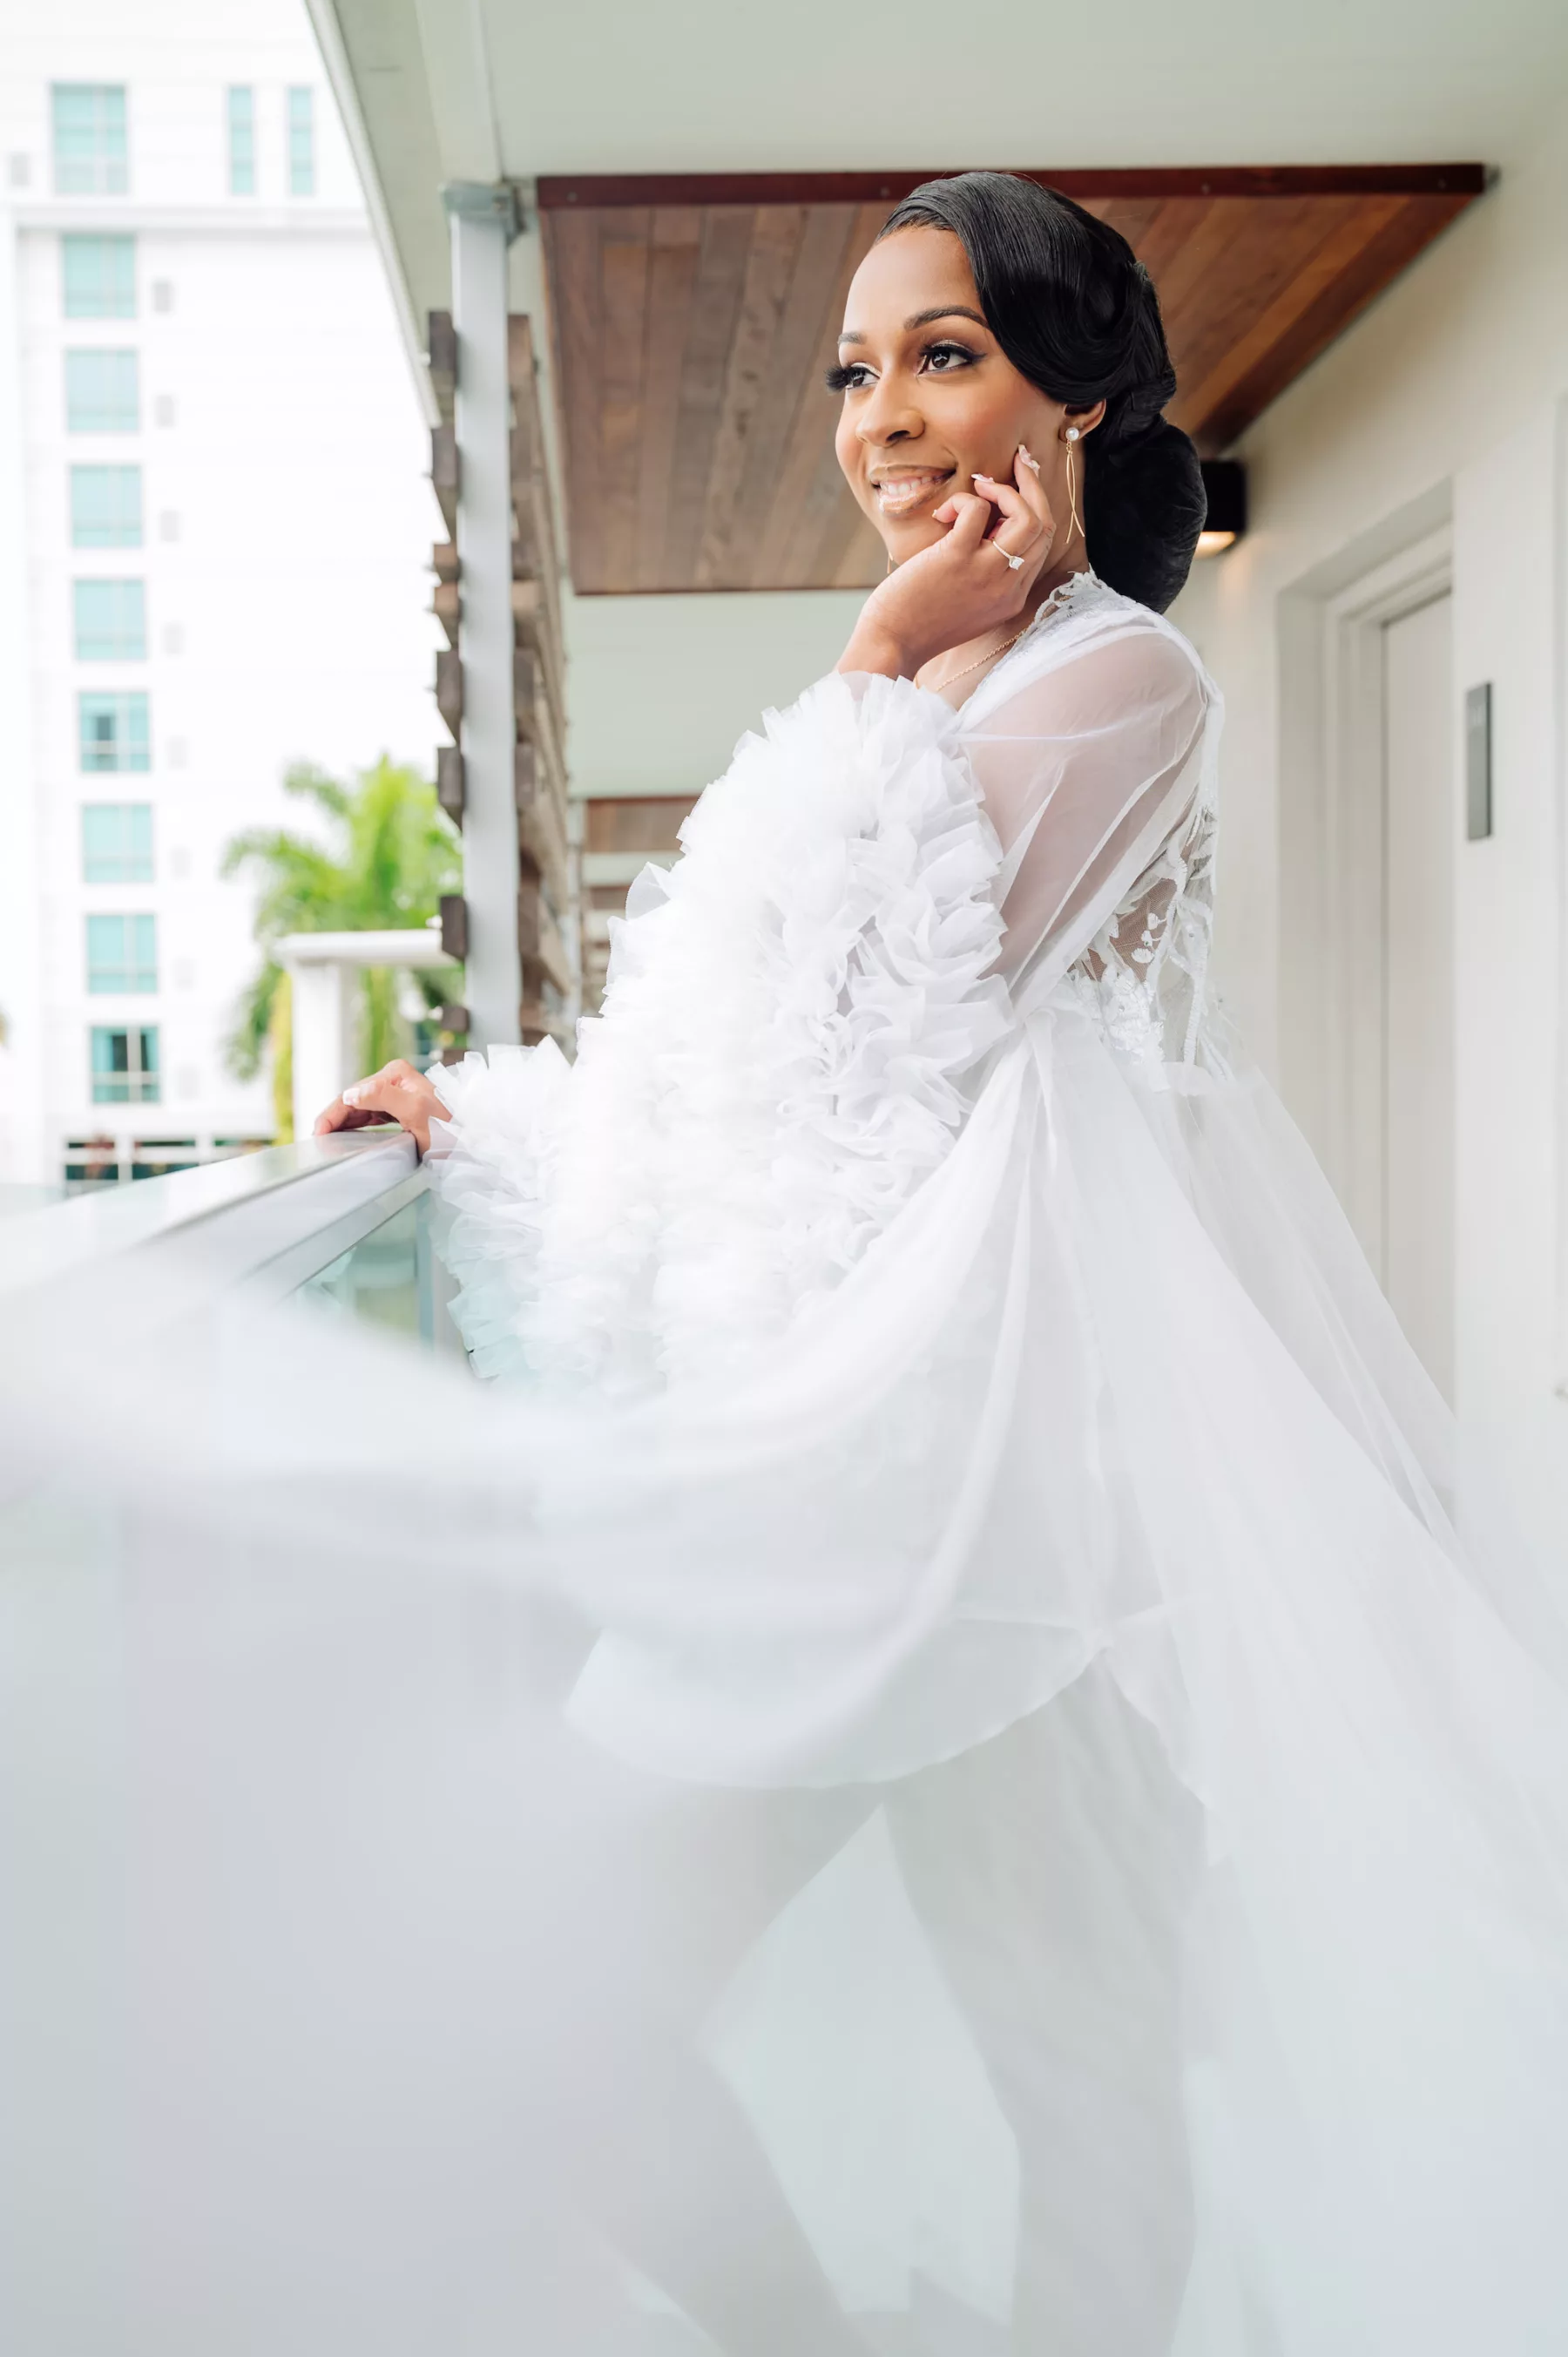 Elegant Bridal Wedding Updo Hair and Makeup Ideas | White Tulle Robe Inspiration